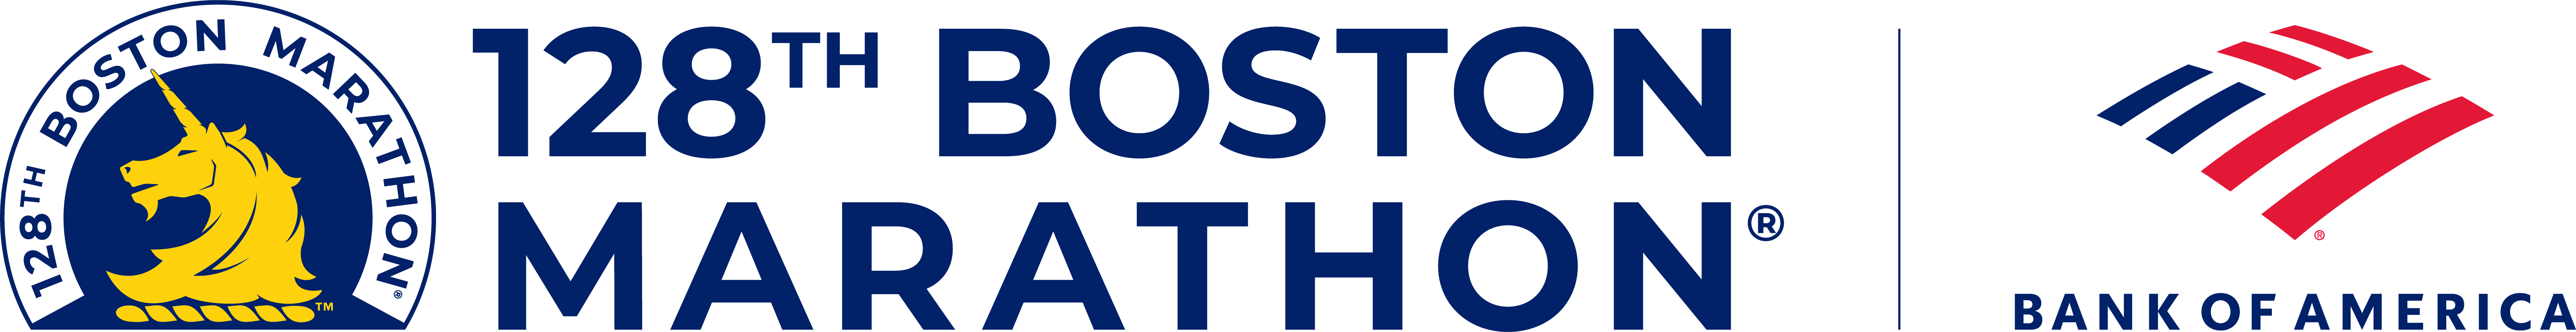 Bank of America to be Presenting Partner of the Boston Marathon